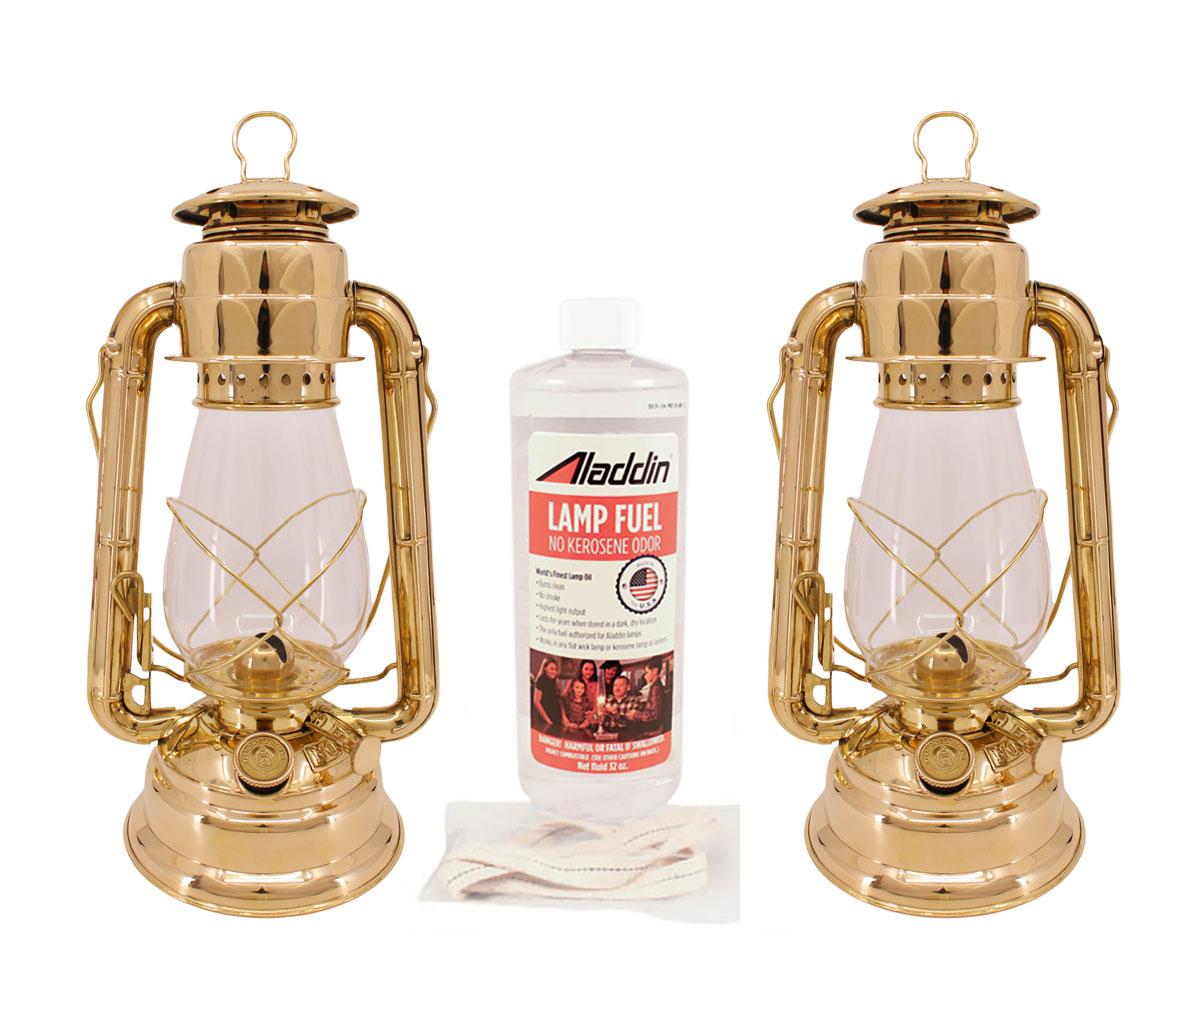 6'' Inch Nautical Brass Antique-Style white Glass-Miner Lamp Ship Lantern